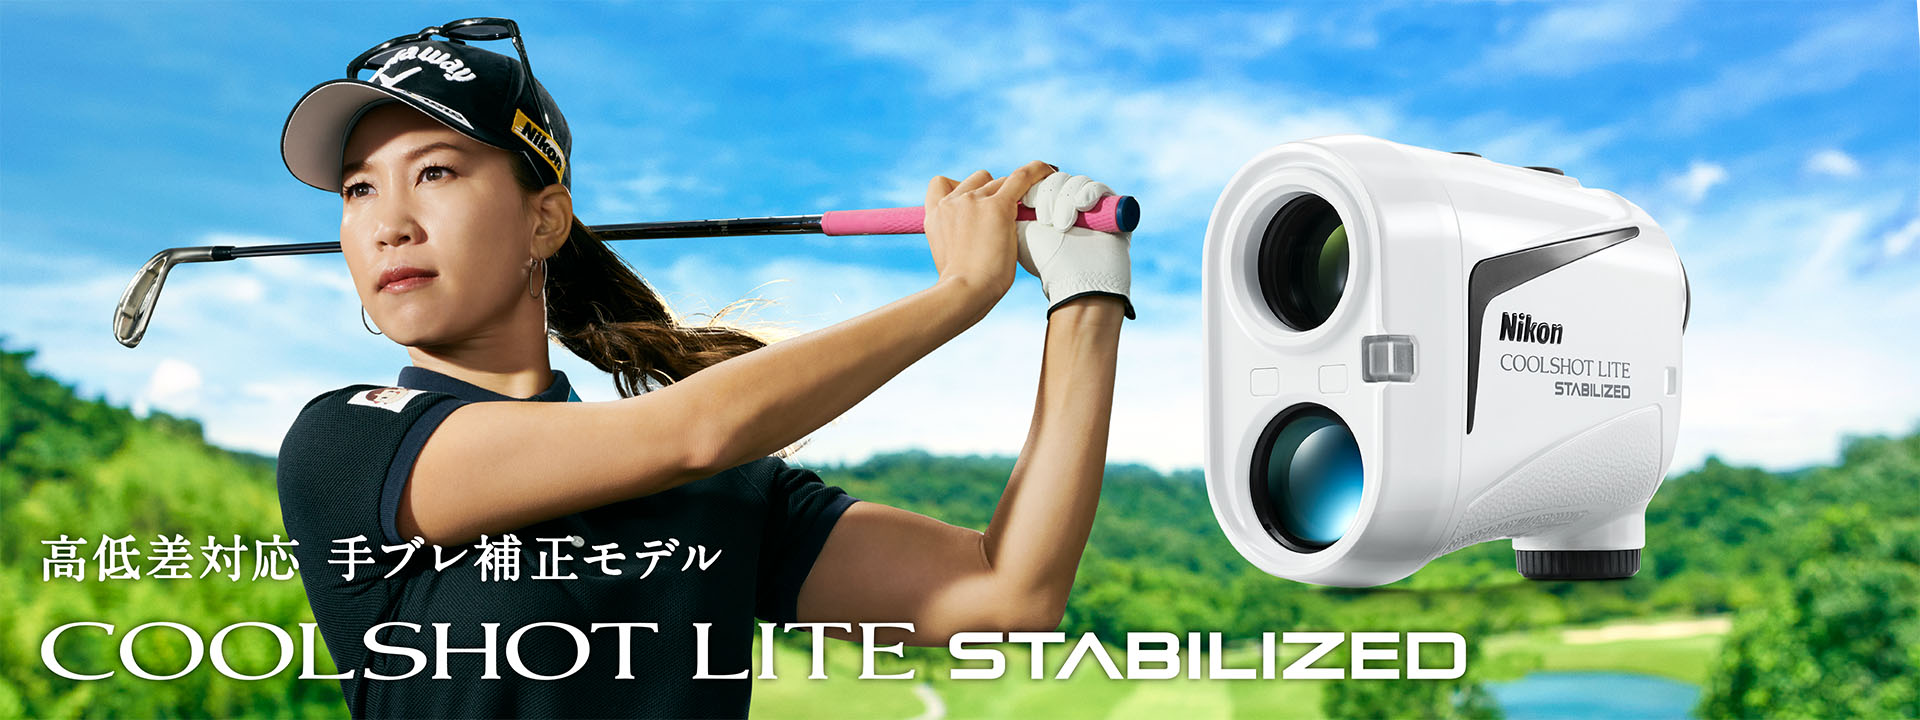 Nikon/ニコン COOLSHOT LITE STABILIZED ゴルフ用 レーザー距離計 /000